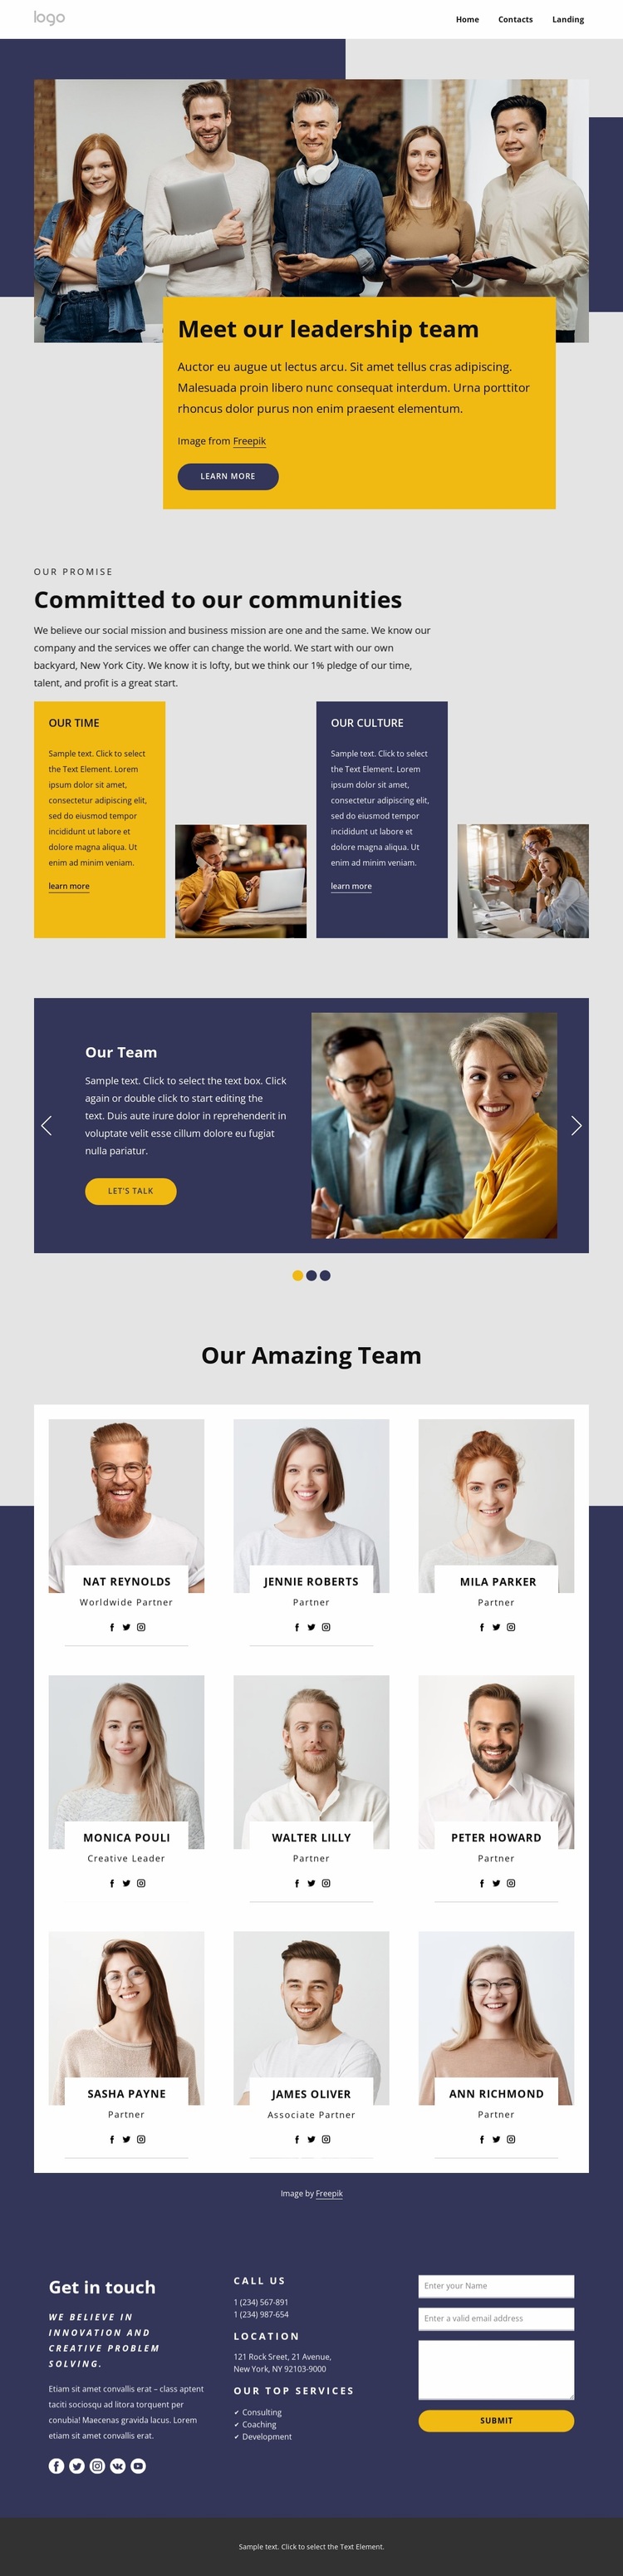 Meet our leadership team Website Design